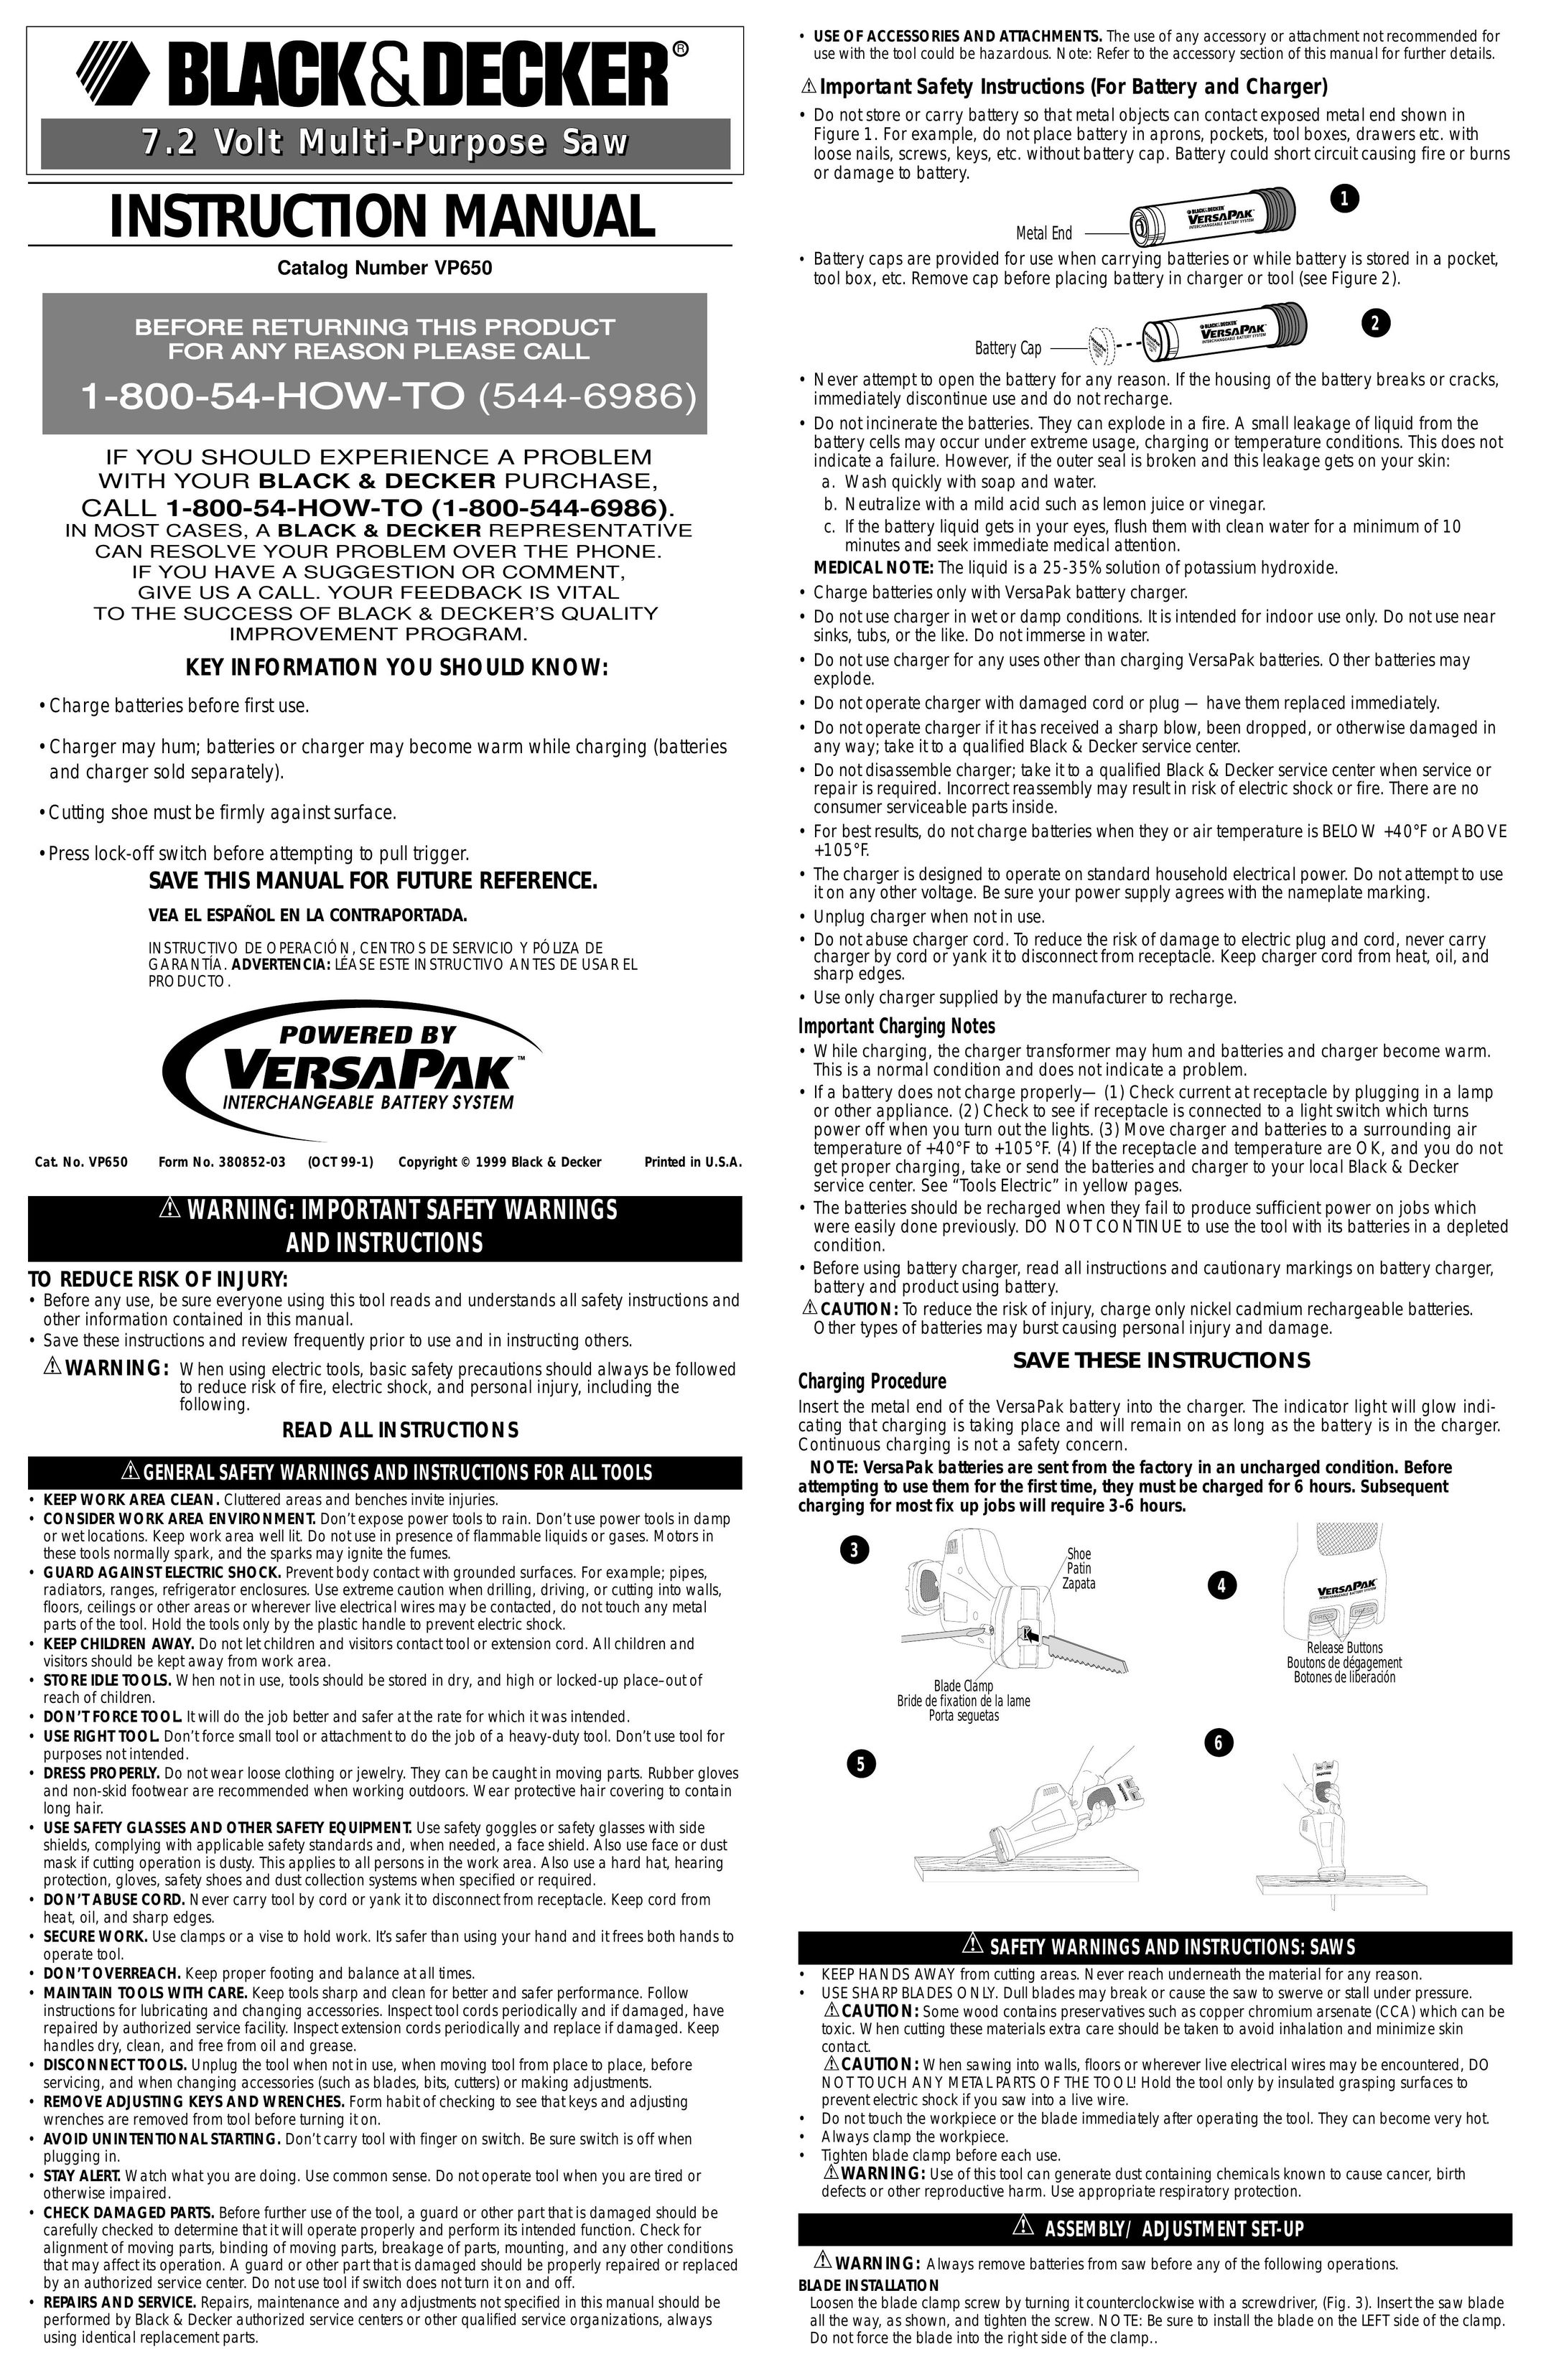 Black & Decker VP650 Welder User Manual